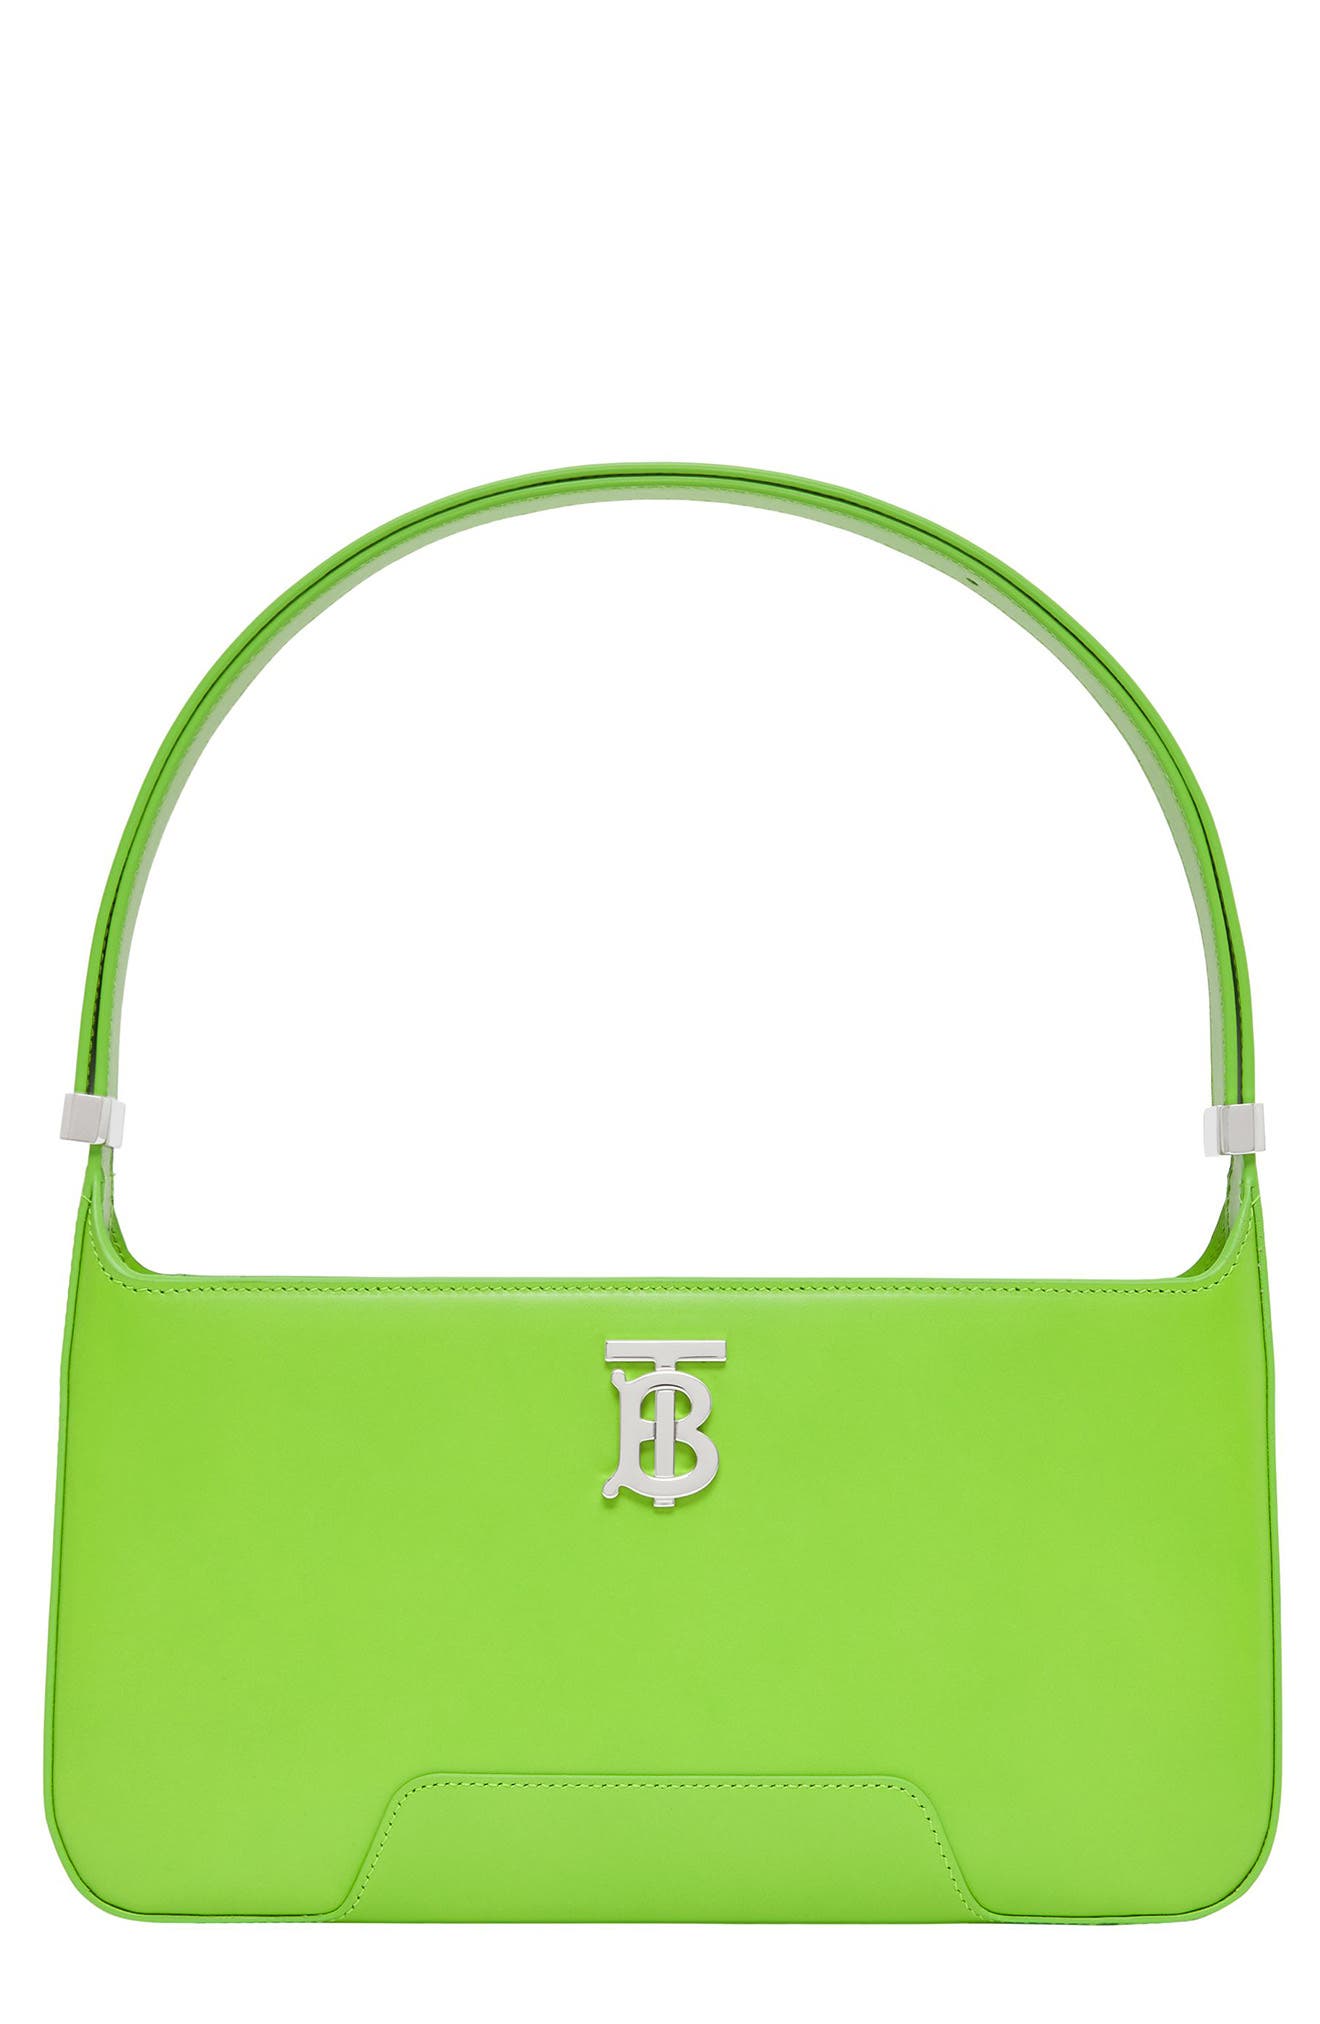 Burberry Medium TB Monogram Leather Shoulder Bag in Brilliant Green